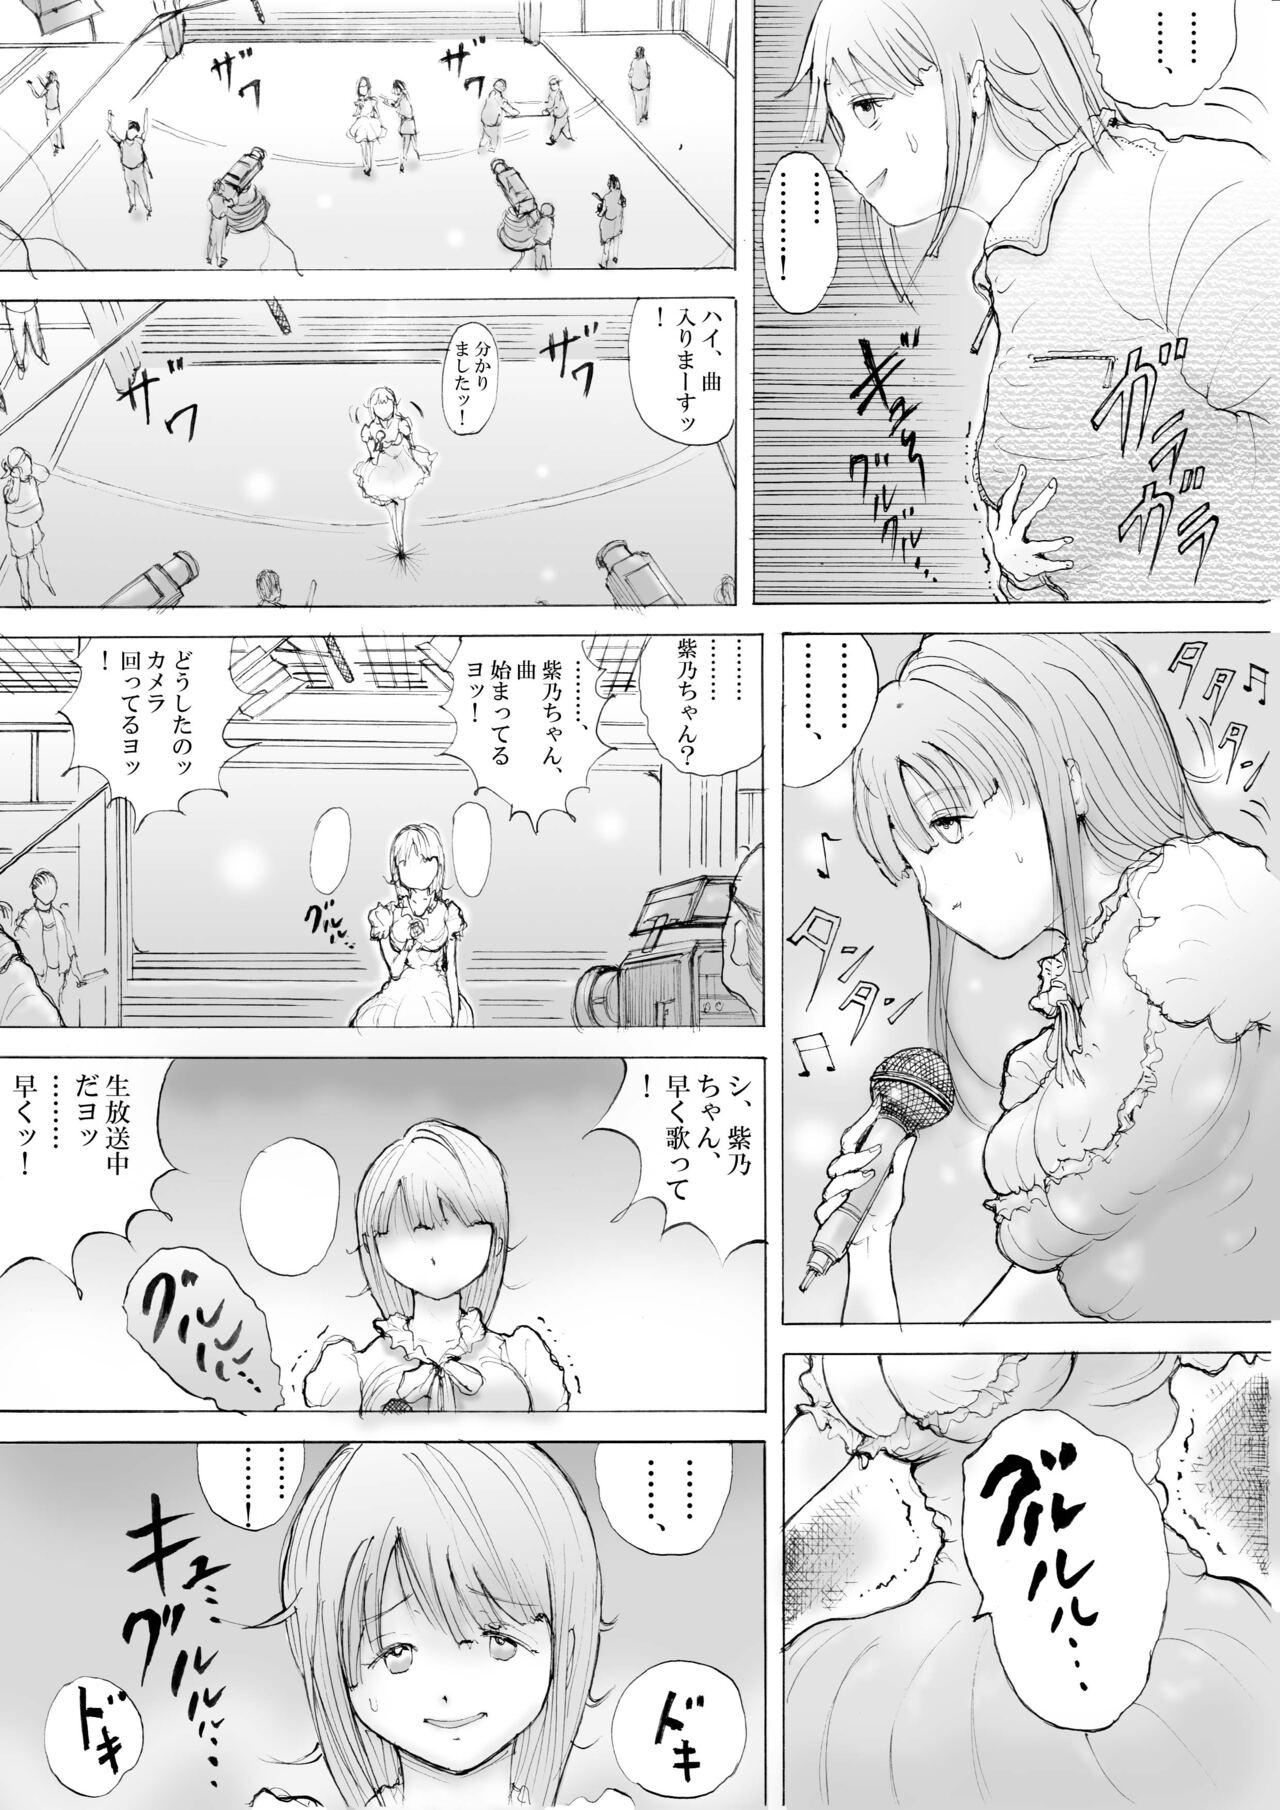 Horror Manga 10 7